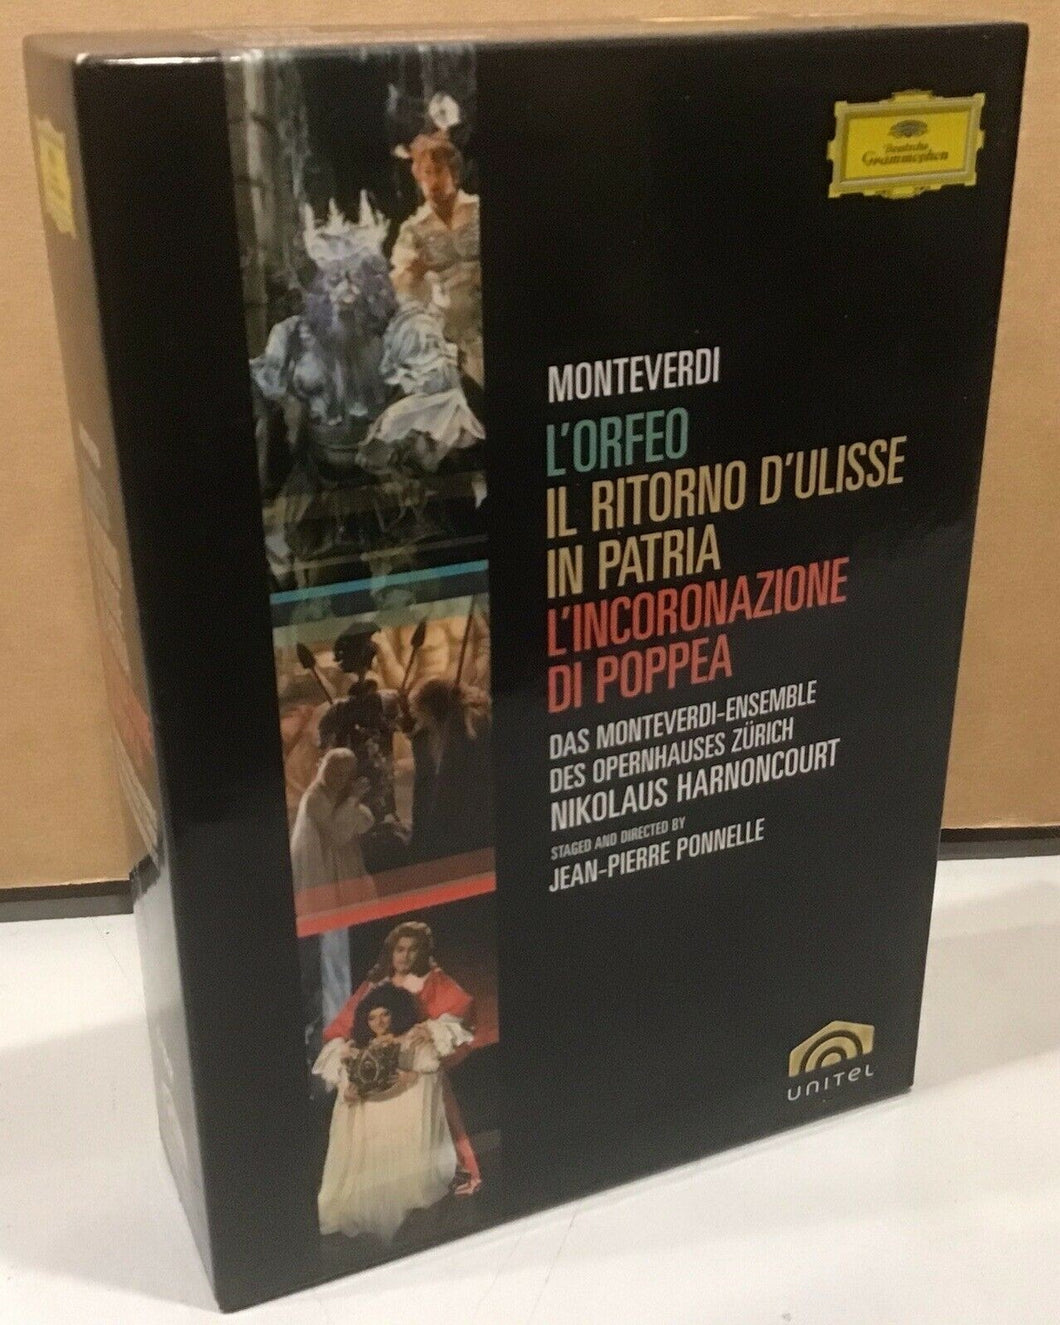 MONTEVERDI OPERA TRILOGY DVD BOX - L'ORFEO, D'ULISSE, L'INCORONAZIONE DI POPEA (USED)